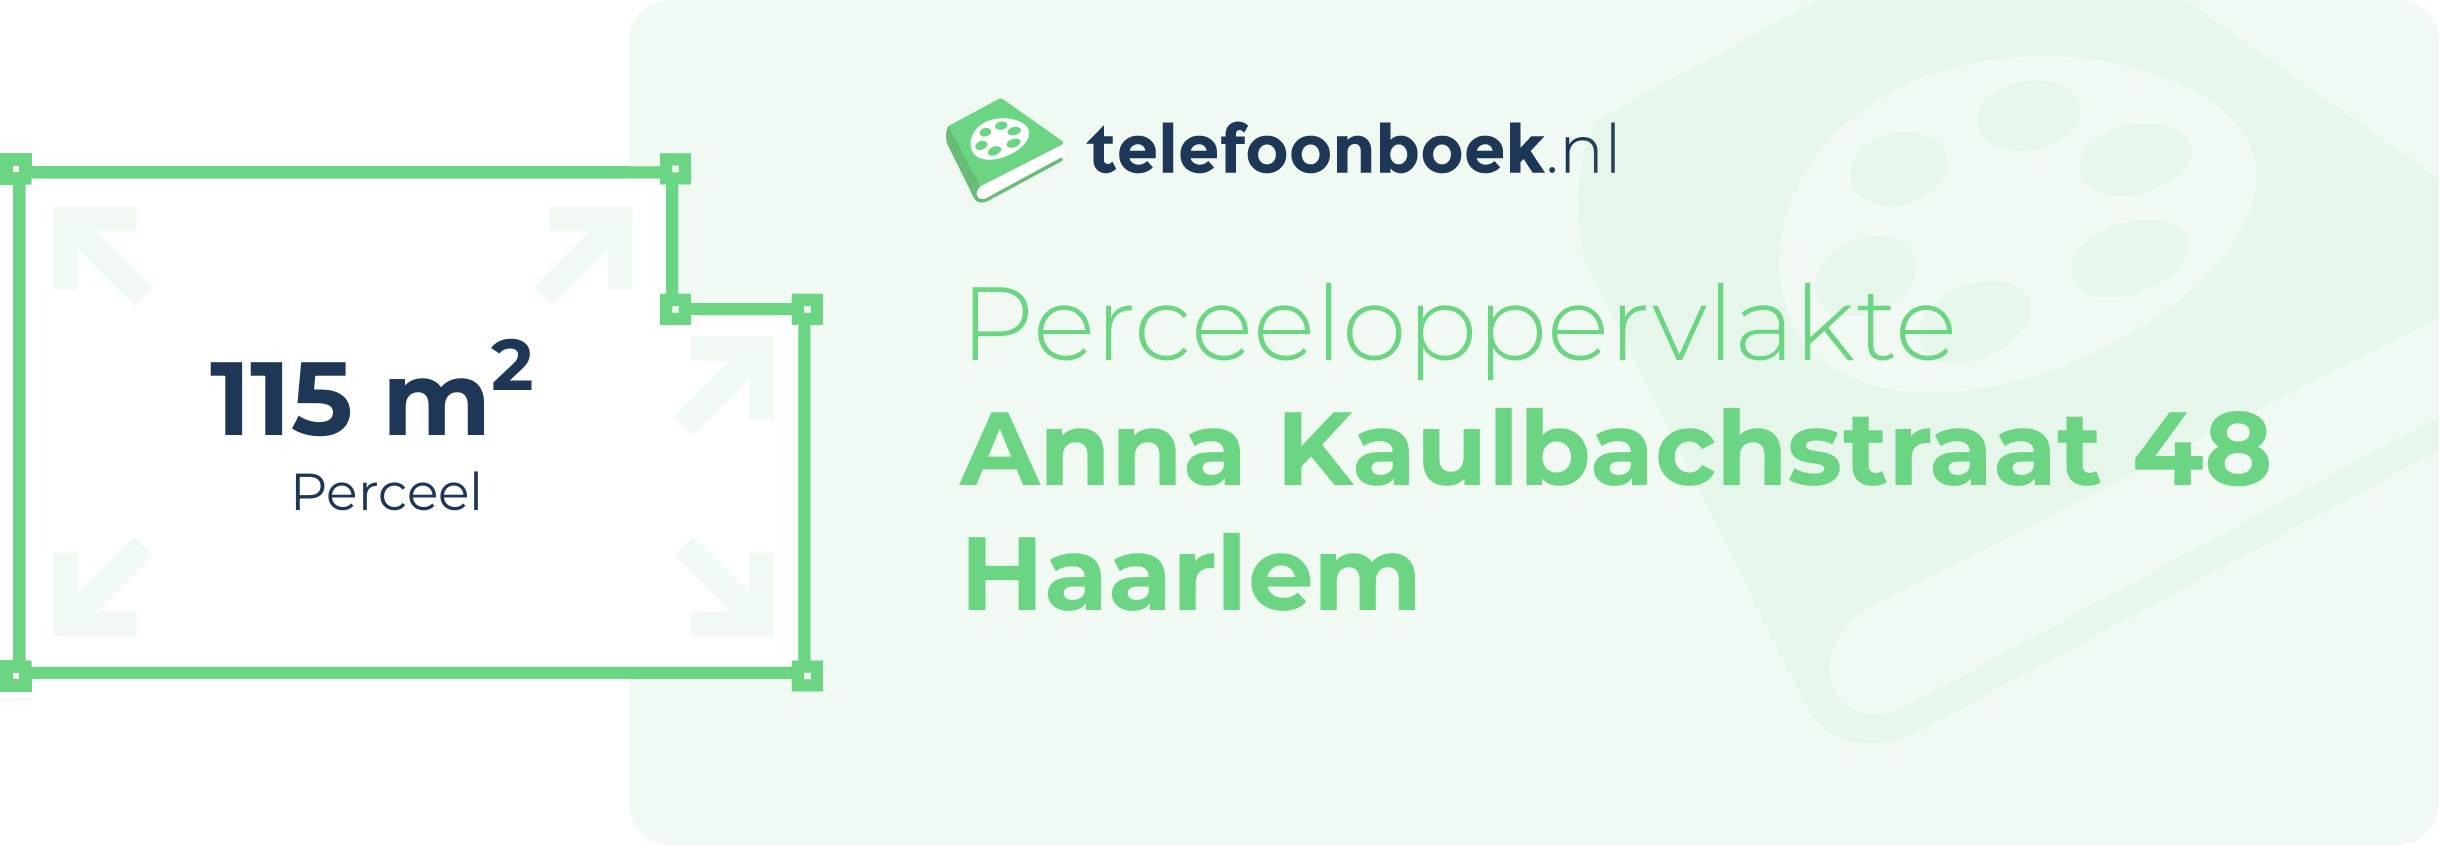 Perceeloppervlakte Anna Kaulbachstraat 48 Haarlem